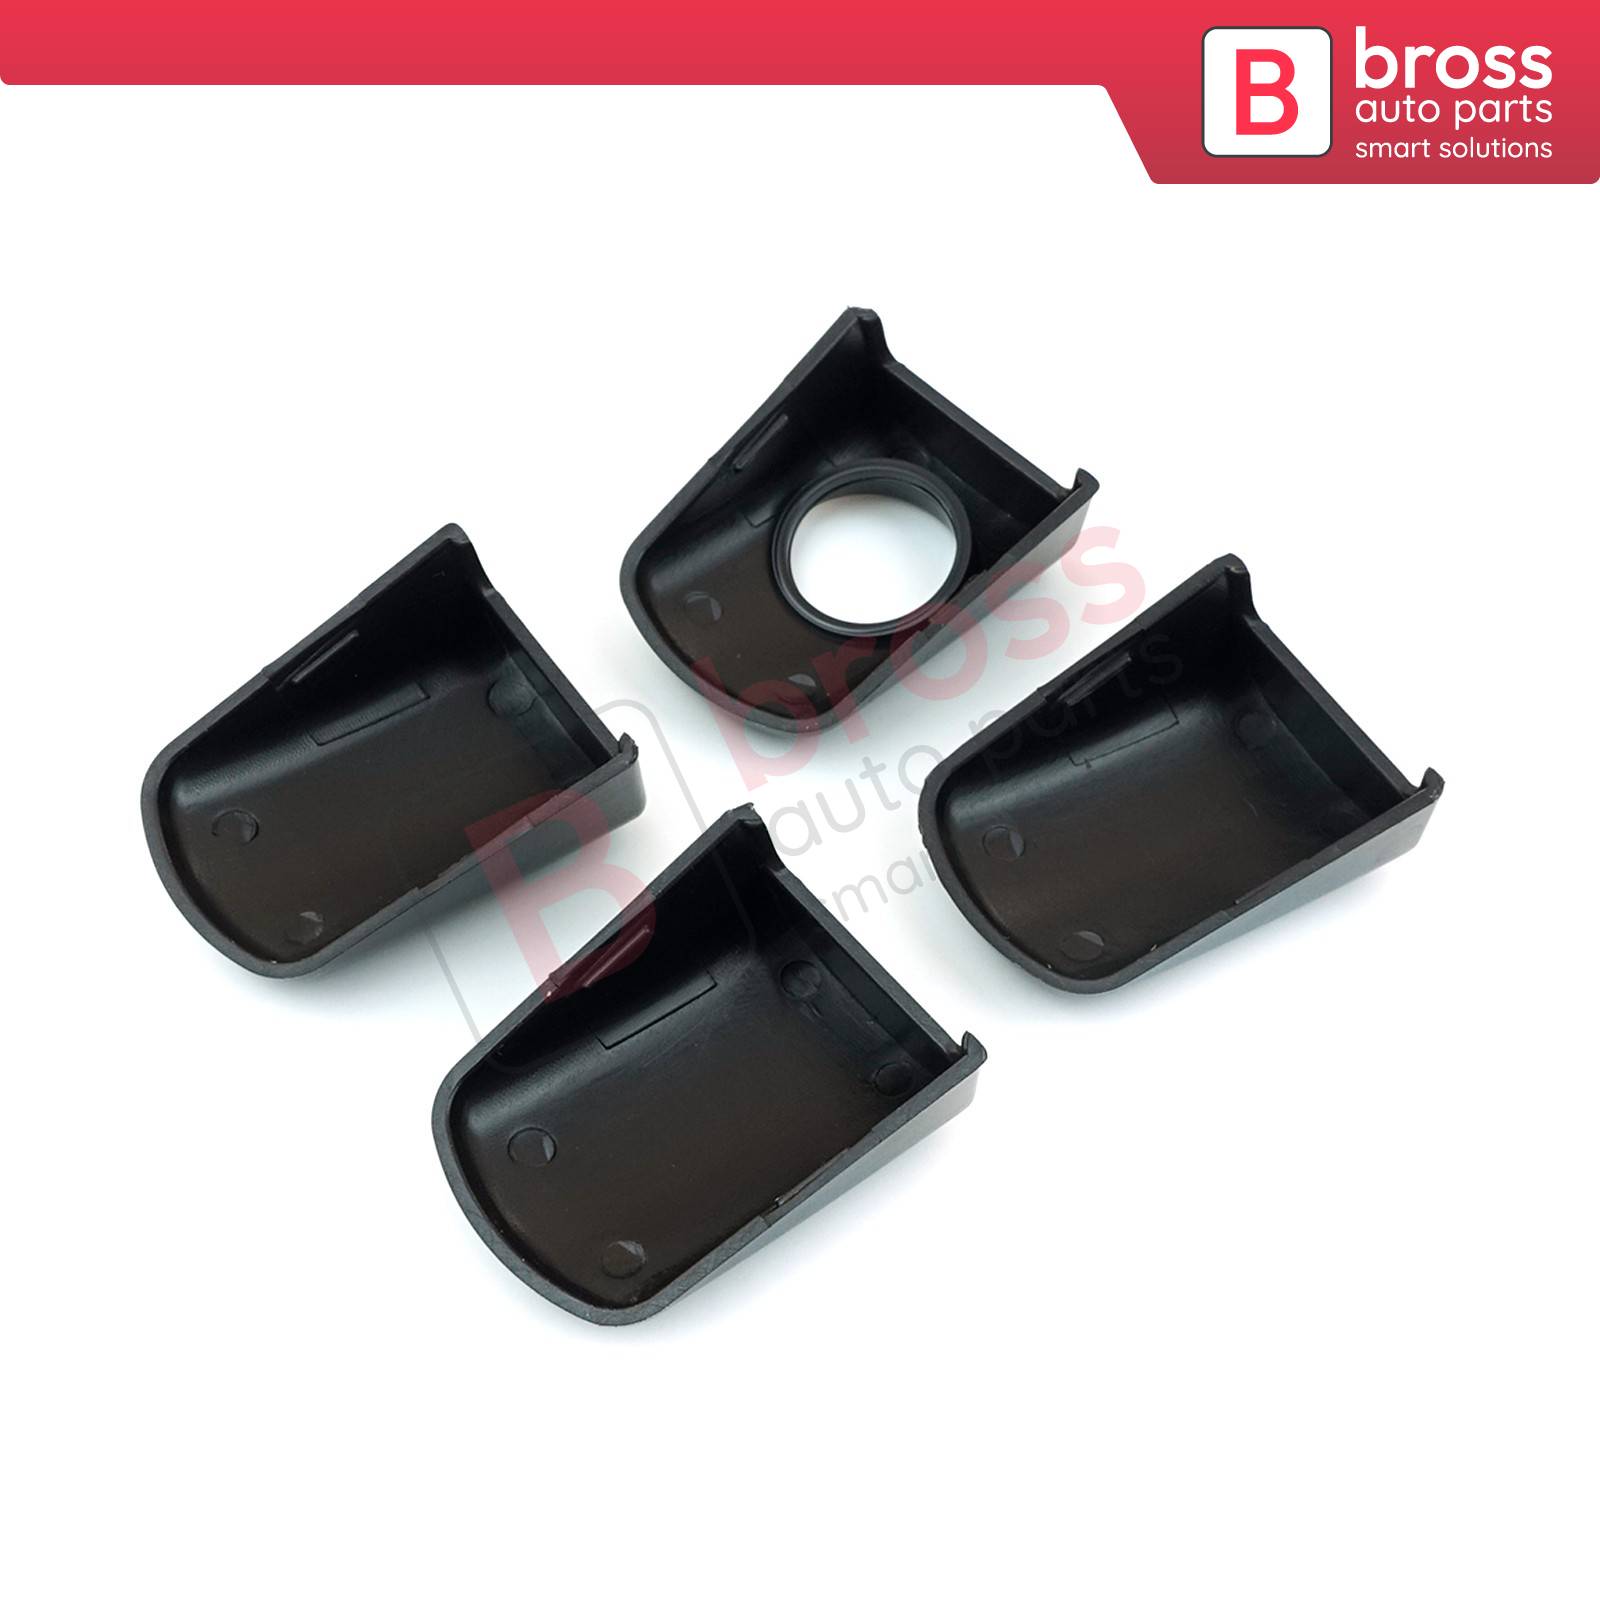 Bross Auto Parts LLC - BDP989 Exterior Outer Door Handle Cover Set 9101GG  for Peugeot Citroen Fiat Toyota